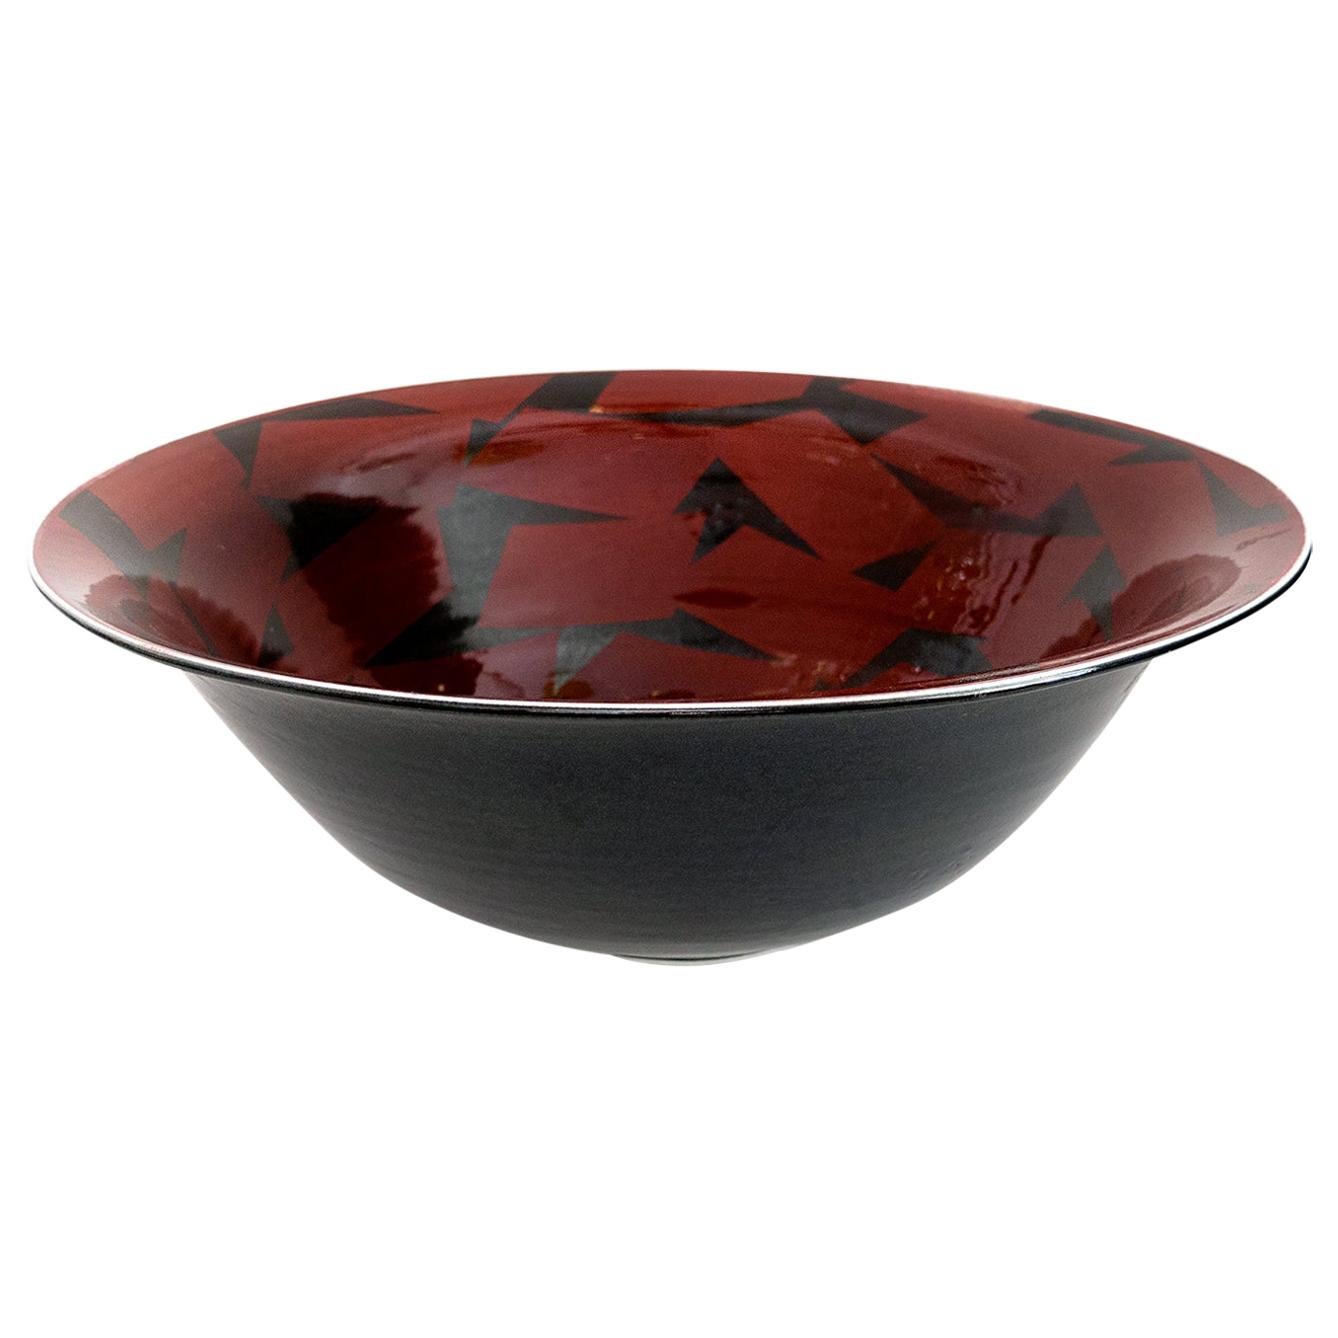 Inger Persson Scandinavian Modern Large Studio Bowl, Red & Black, 1988 Rorstrand For Sale